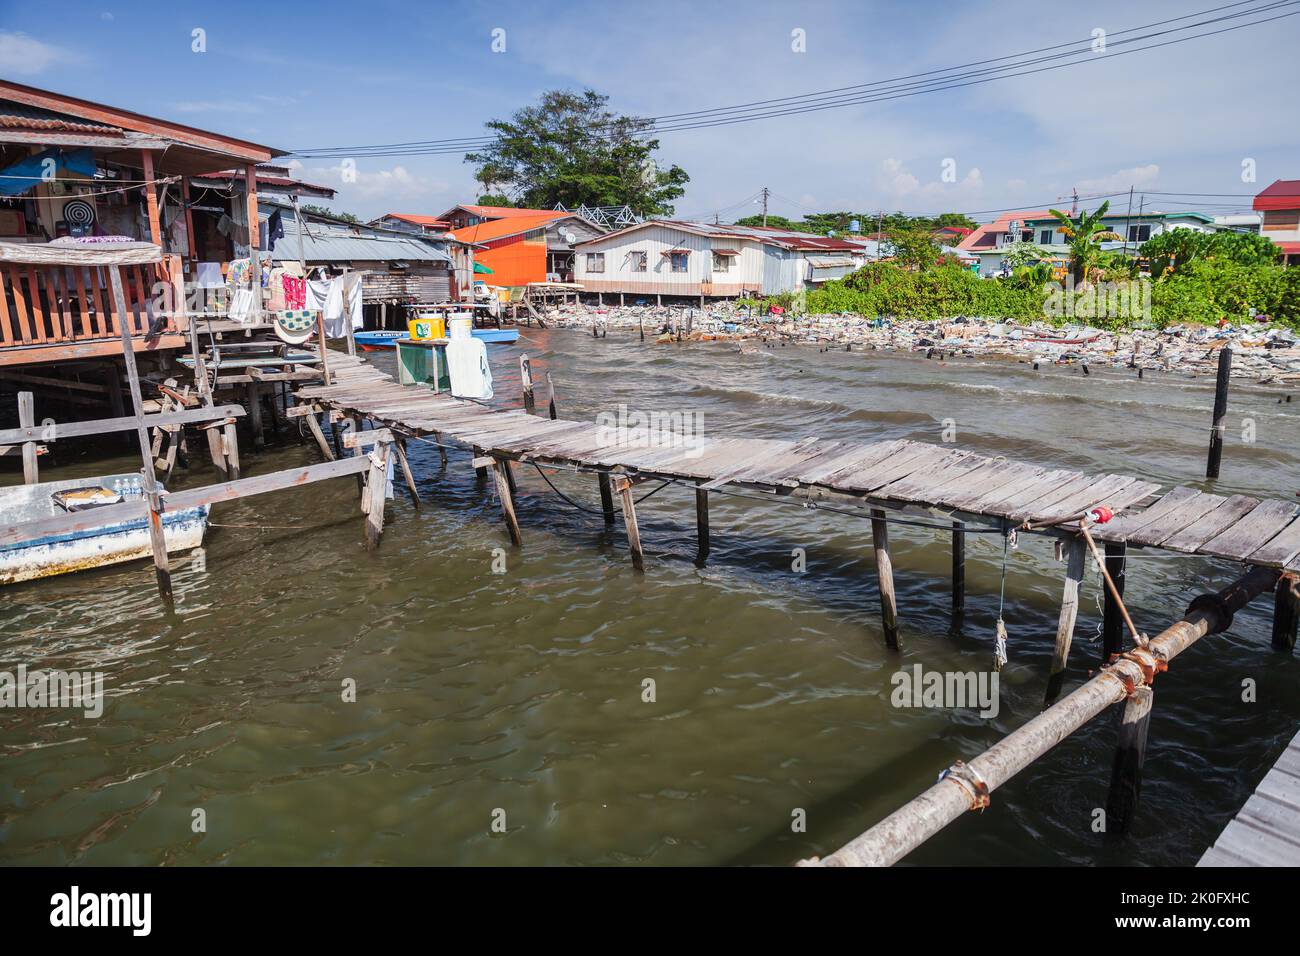 Kota Kinabalu, Malaysia - March 17, 2019: Poor coastal district of Kota Kinabalu city. Living houses and footbridges on stilts Stock Photo